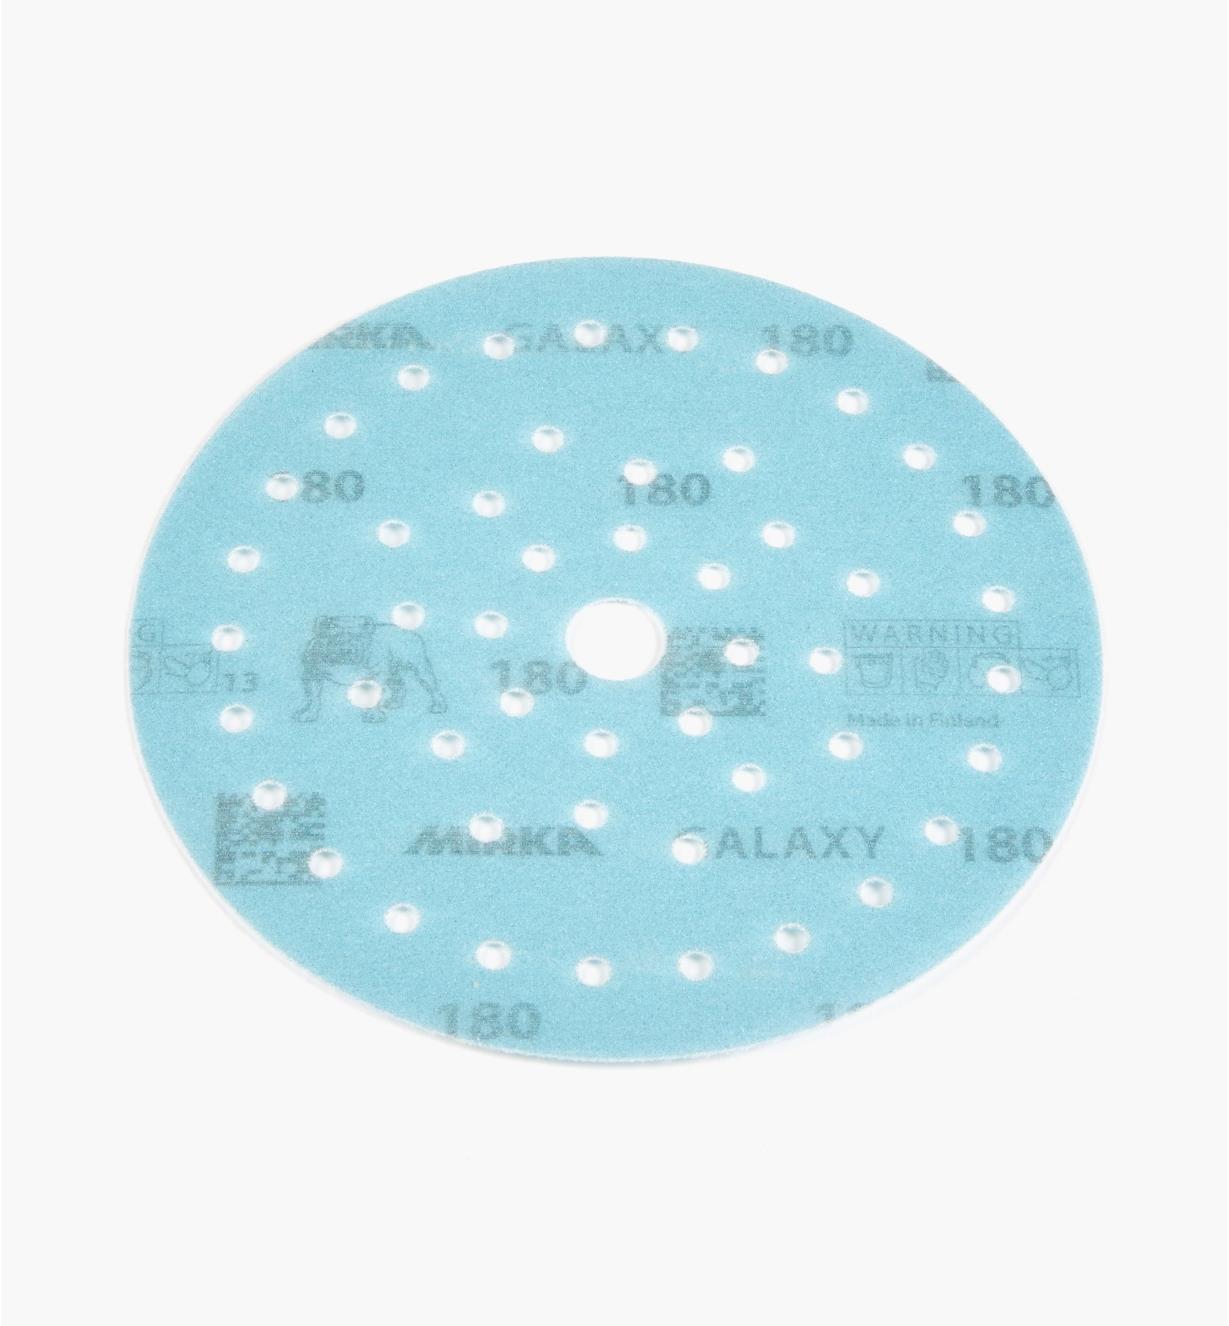 08K2146 - 180x 6" Galaxy Multifit Grip Disc, ea.